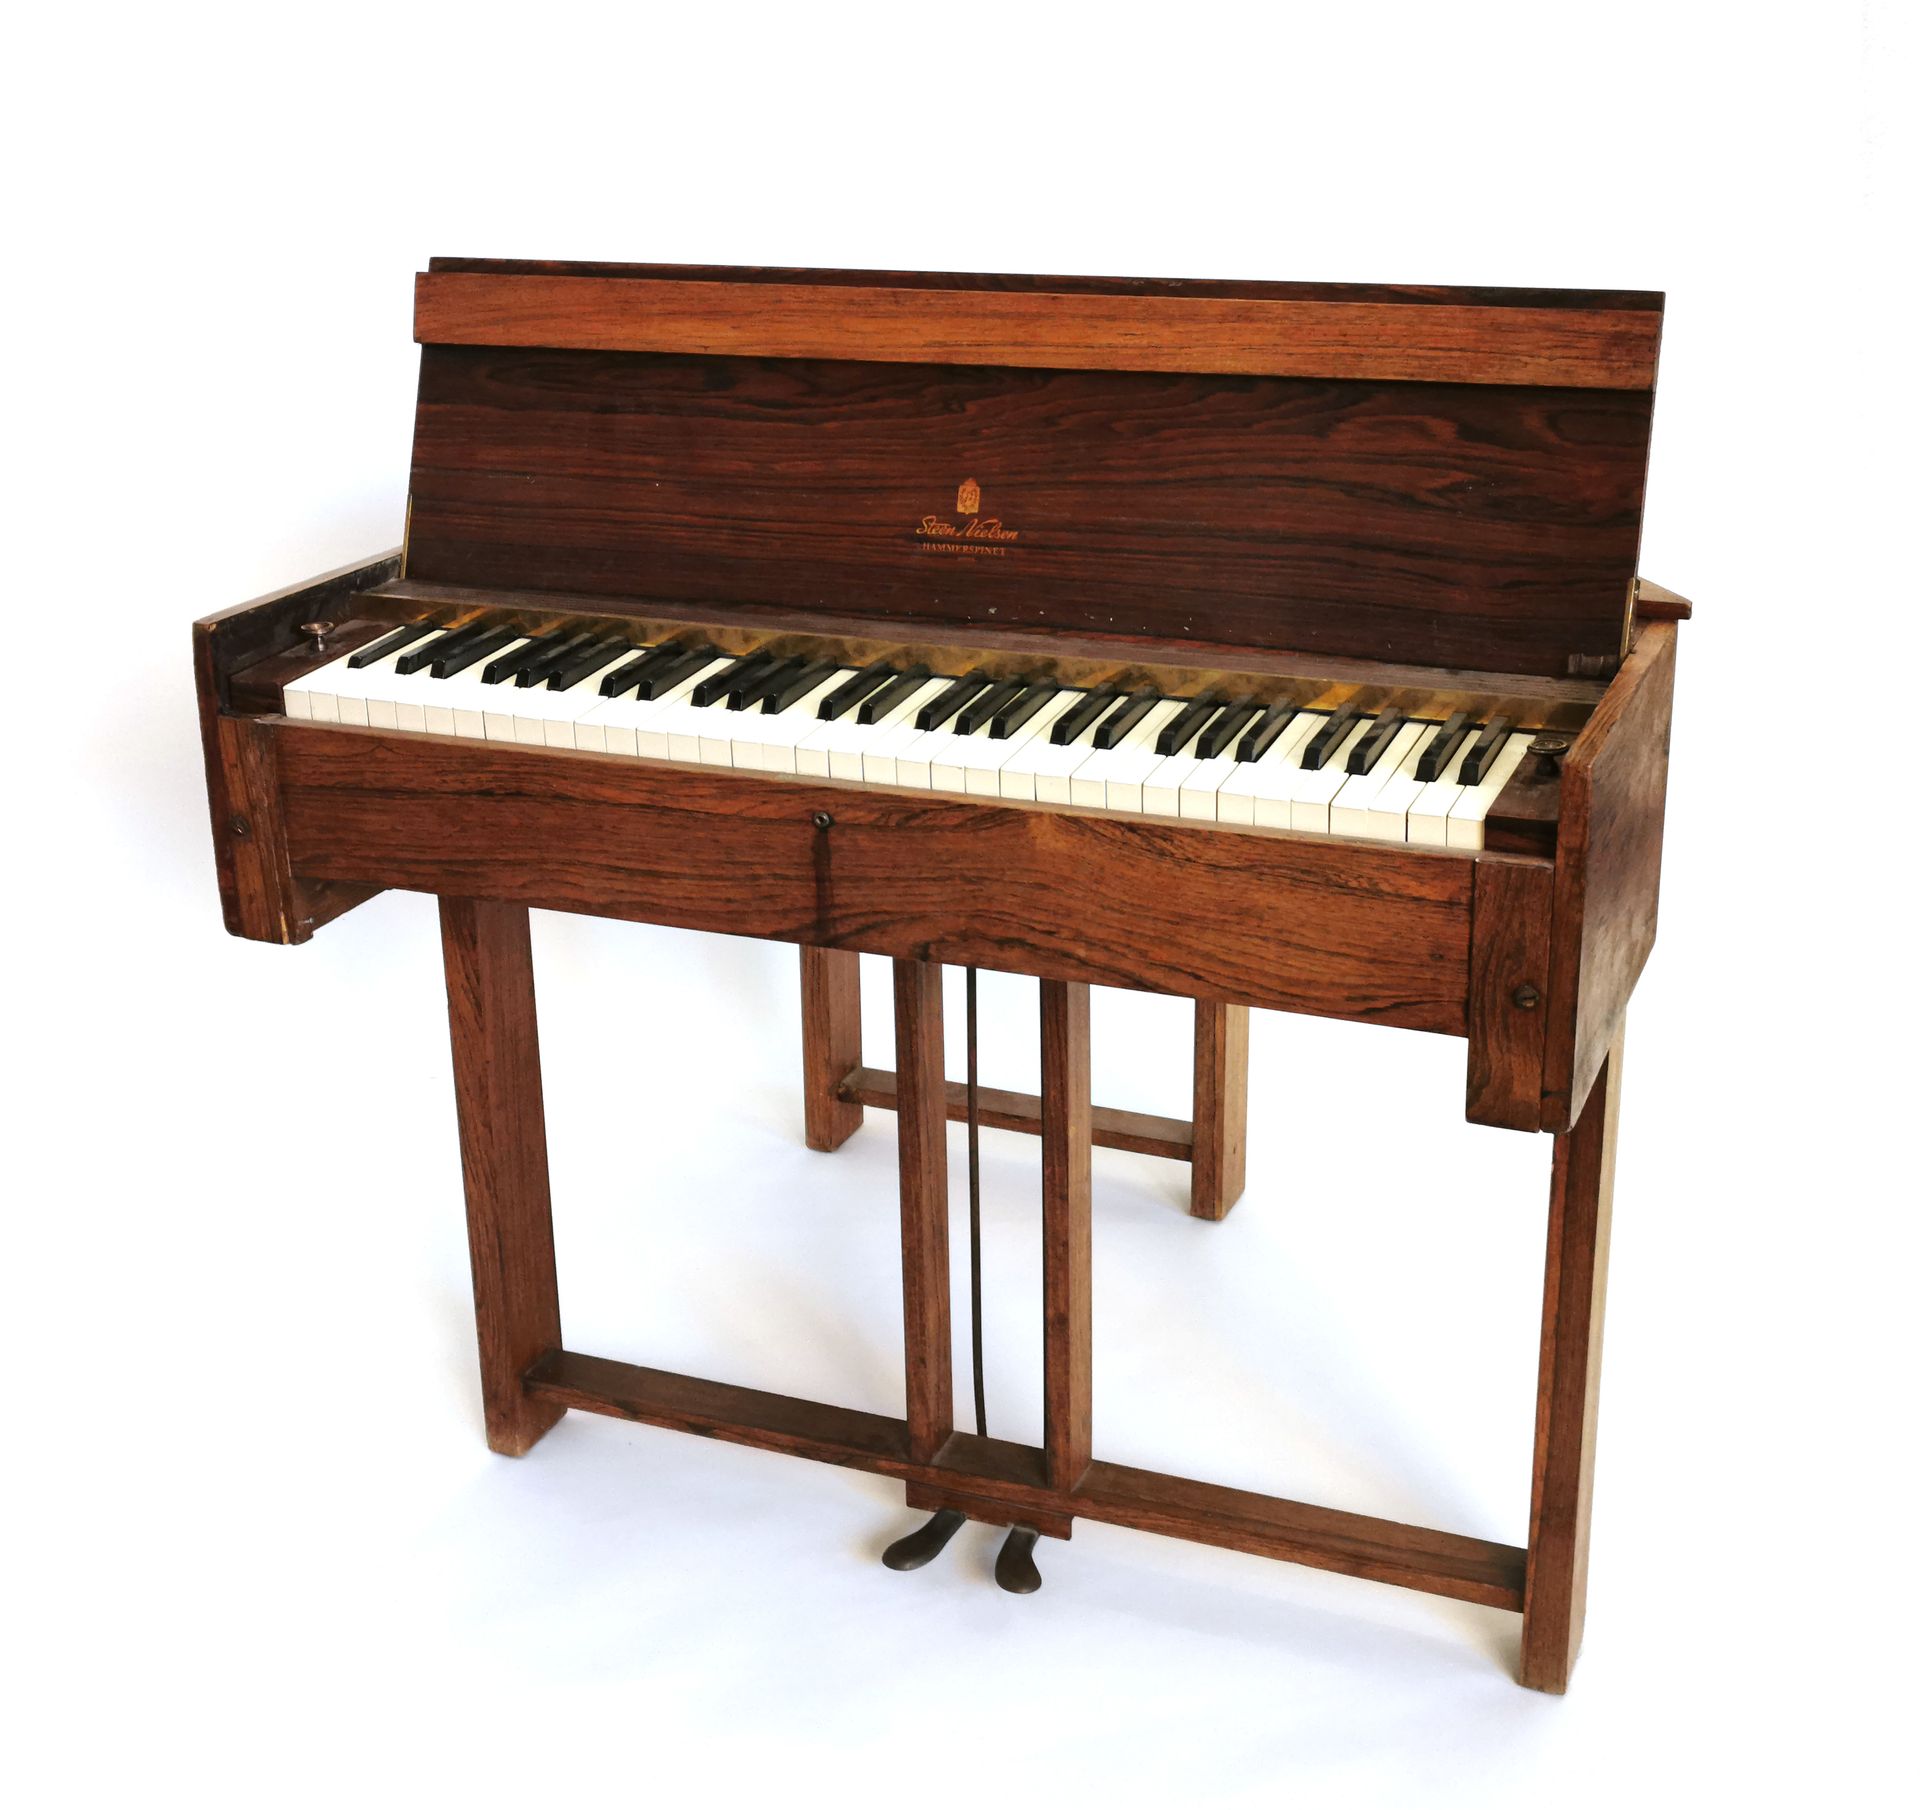 Null STEEN NIELSEN Hammerspinet

钢琴/大键琴，带紫檀木琴盒，键盘下面有一个拉环可以从钢琴切换到大键琴

60年代和70年代，在&hellip;